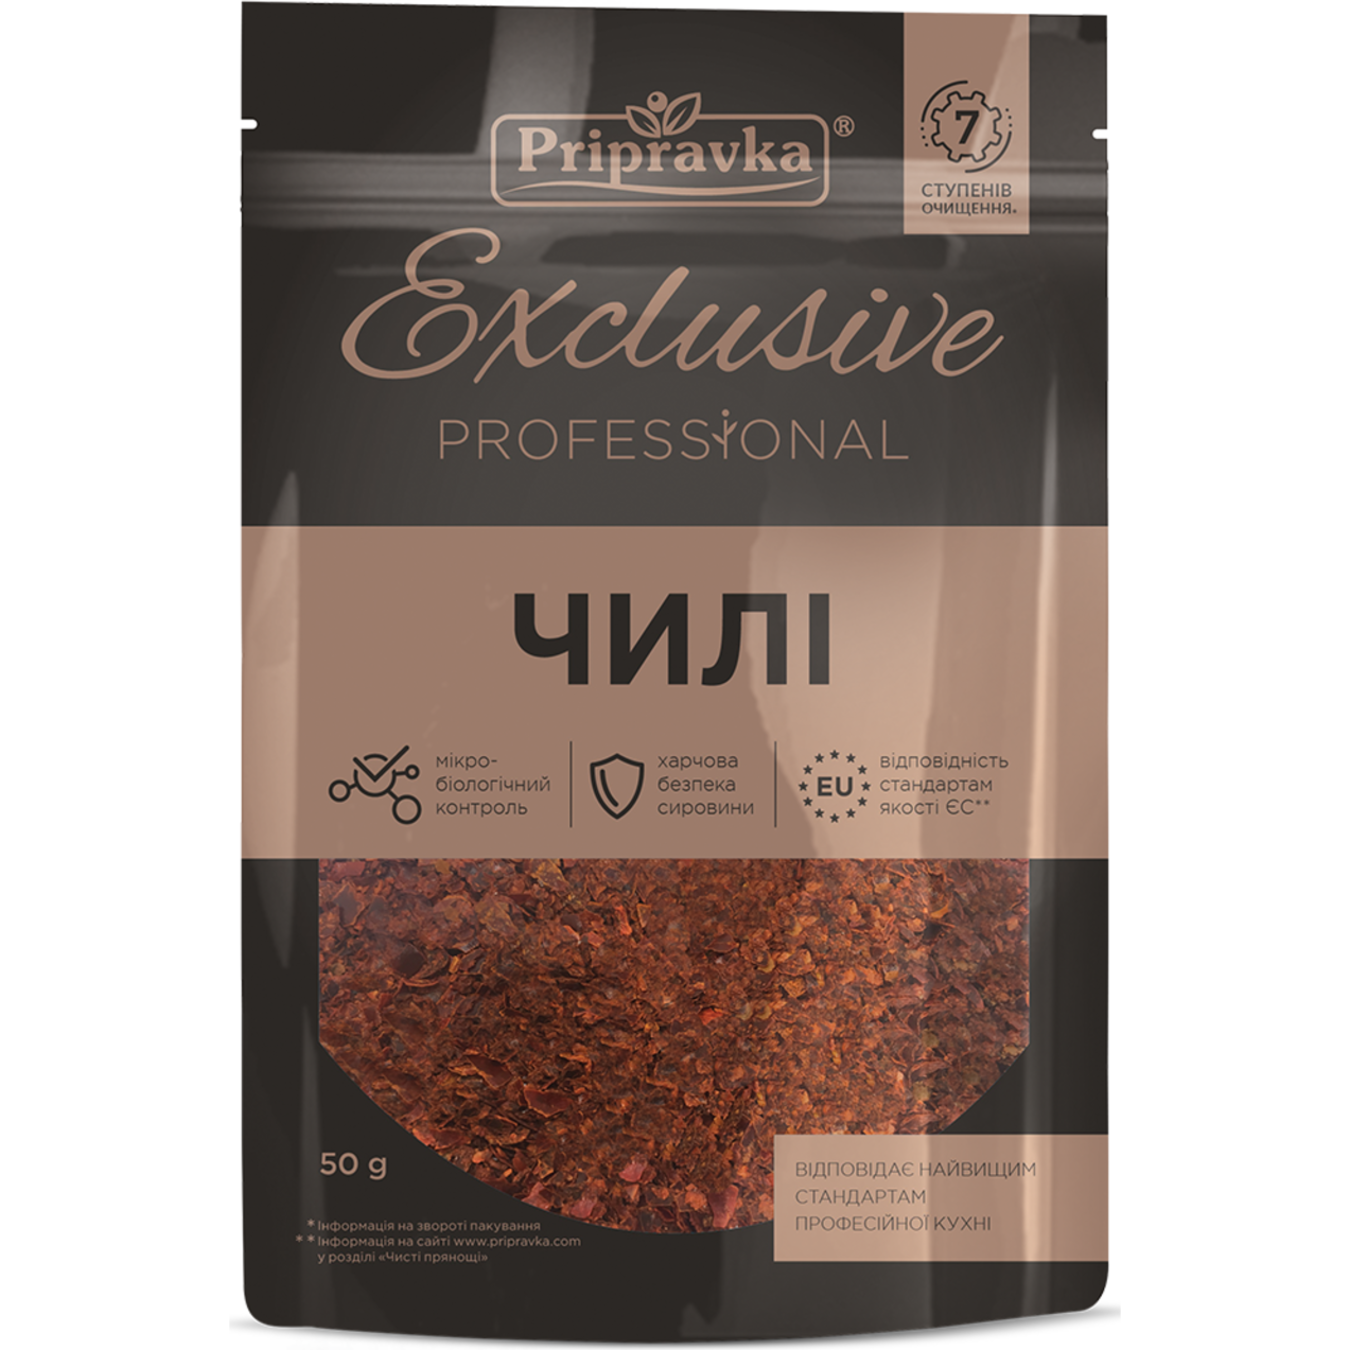 Pripravka Exclusive Professional chili pepper 60g